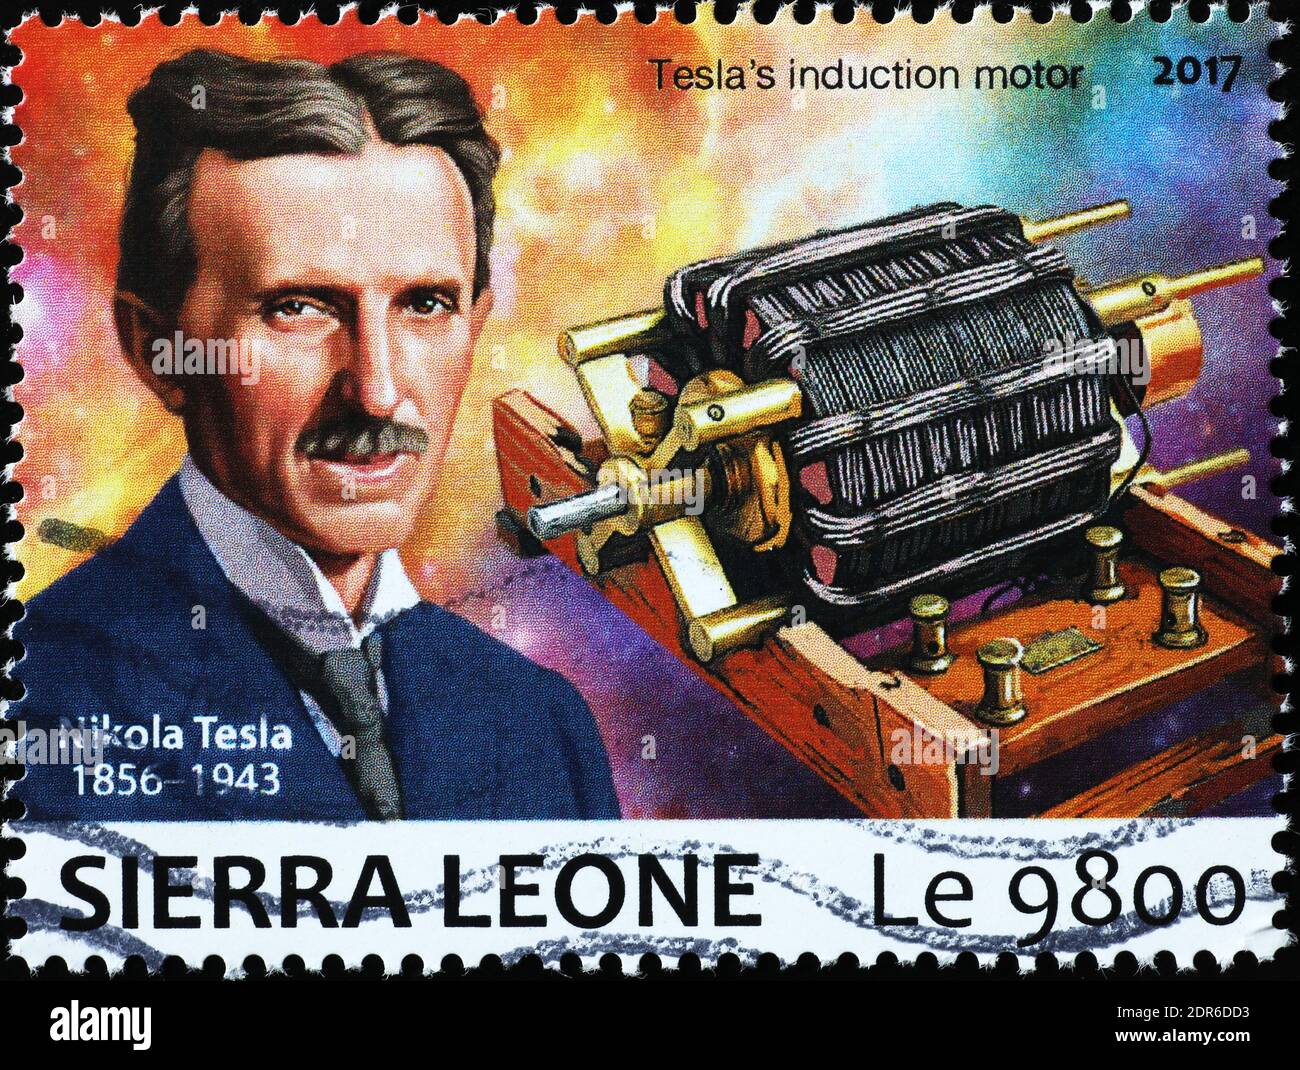 Tesla's induction motor on postage stamp Stock Photo